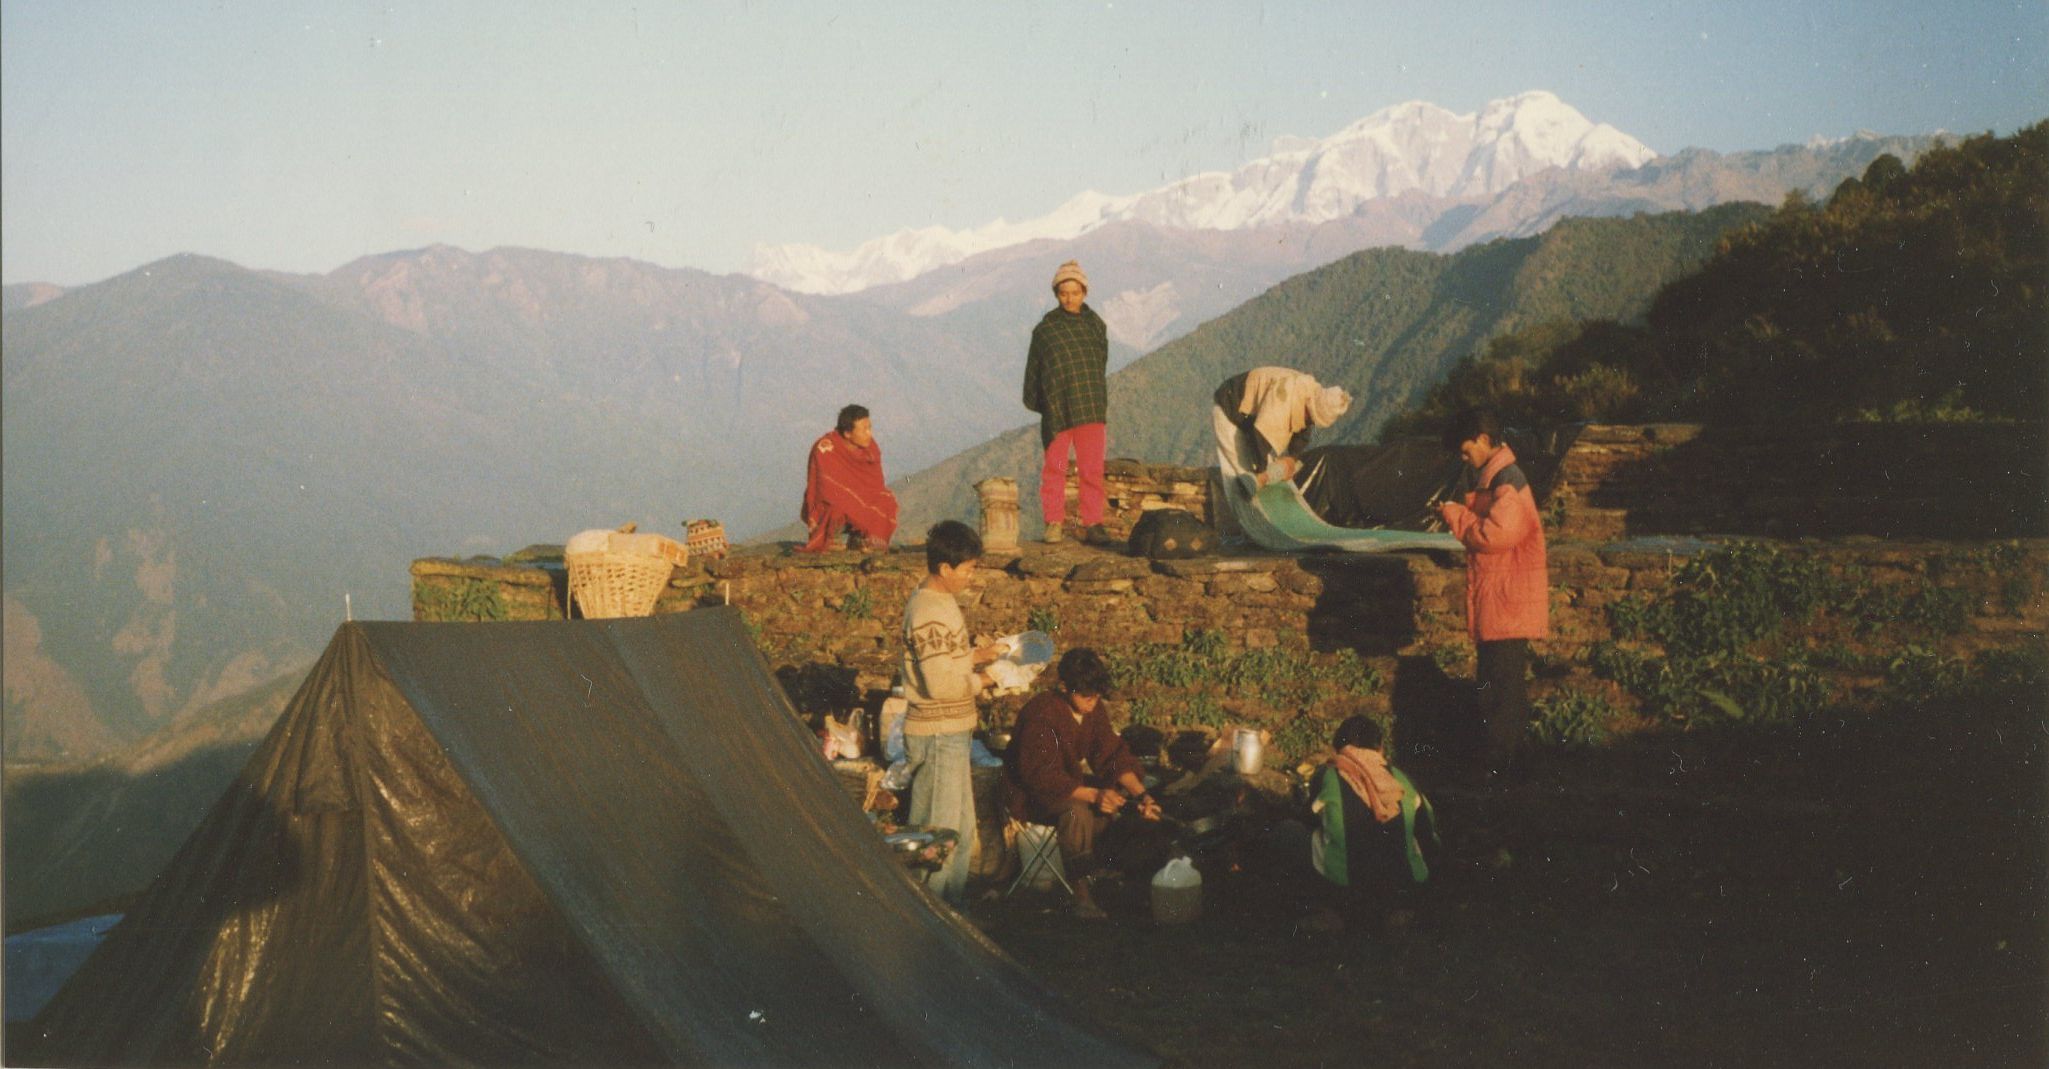 Sunrise at Ganpokhara beneath the Lamjung Himal